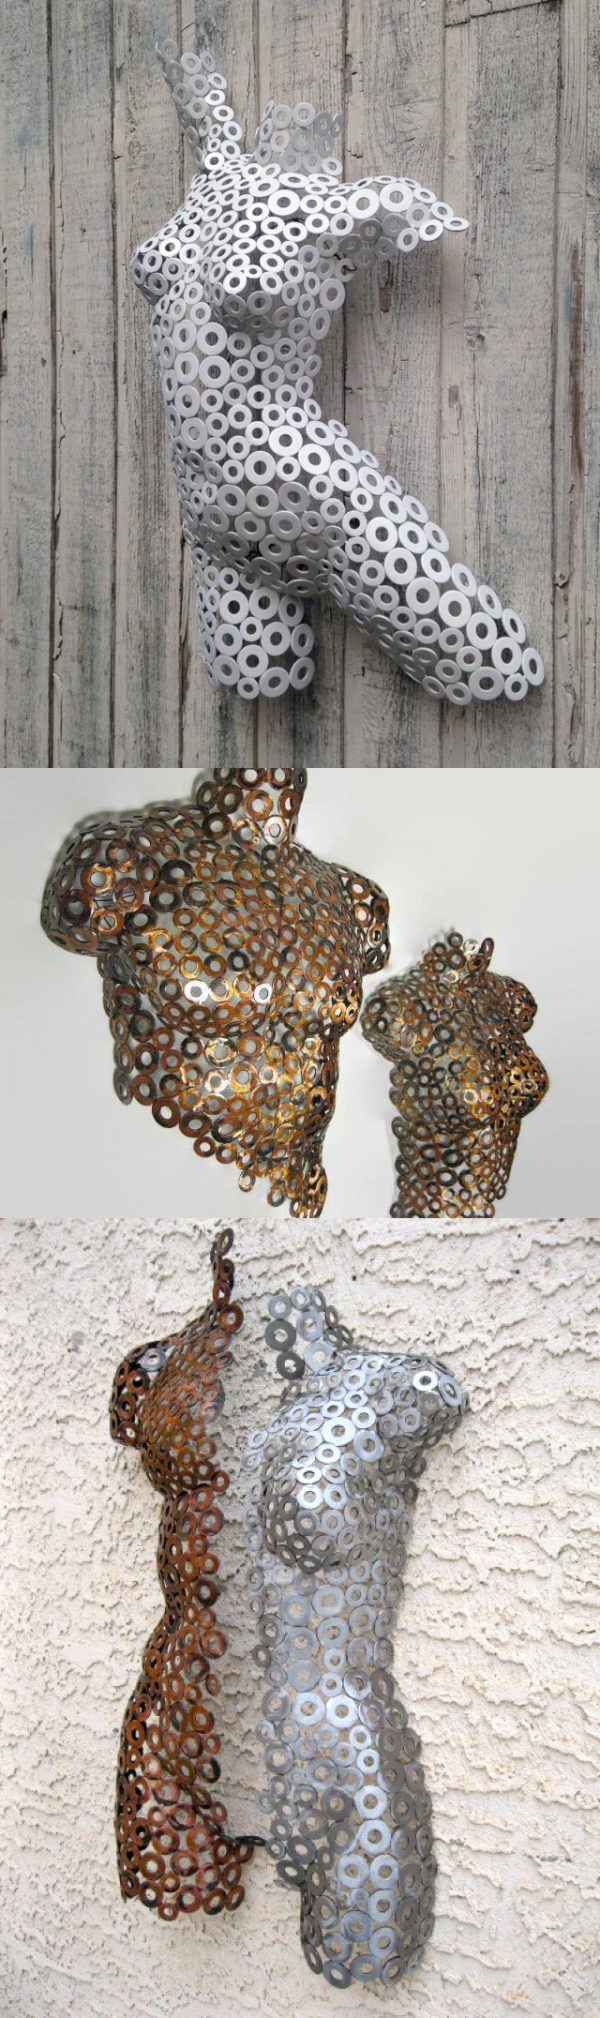 https://www.home-designing.com/wp-content/uploads/2018/06/Metal-Human-Form-Wall-Sculpture-Female-Body-Silhouette-Art-Silver-600x2018.jpg